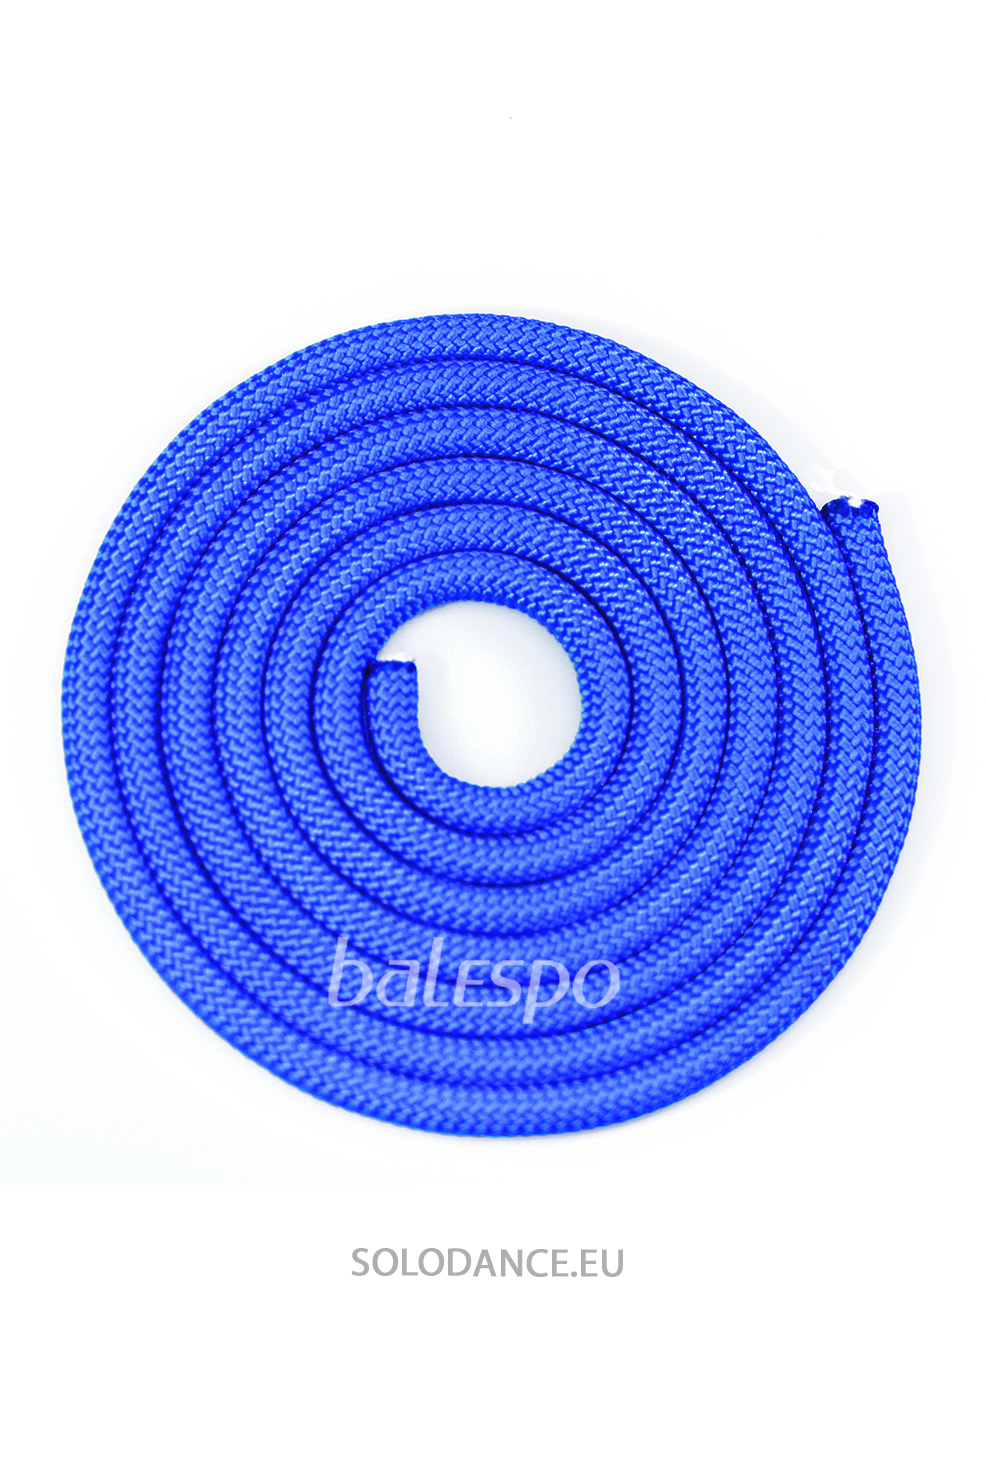 Gymnastic rope BALESPO 2,5 m blue